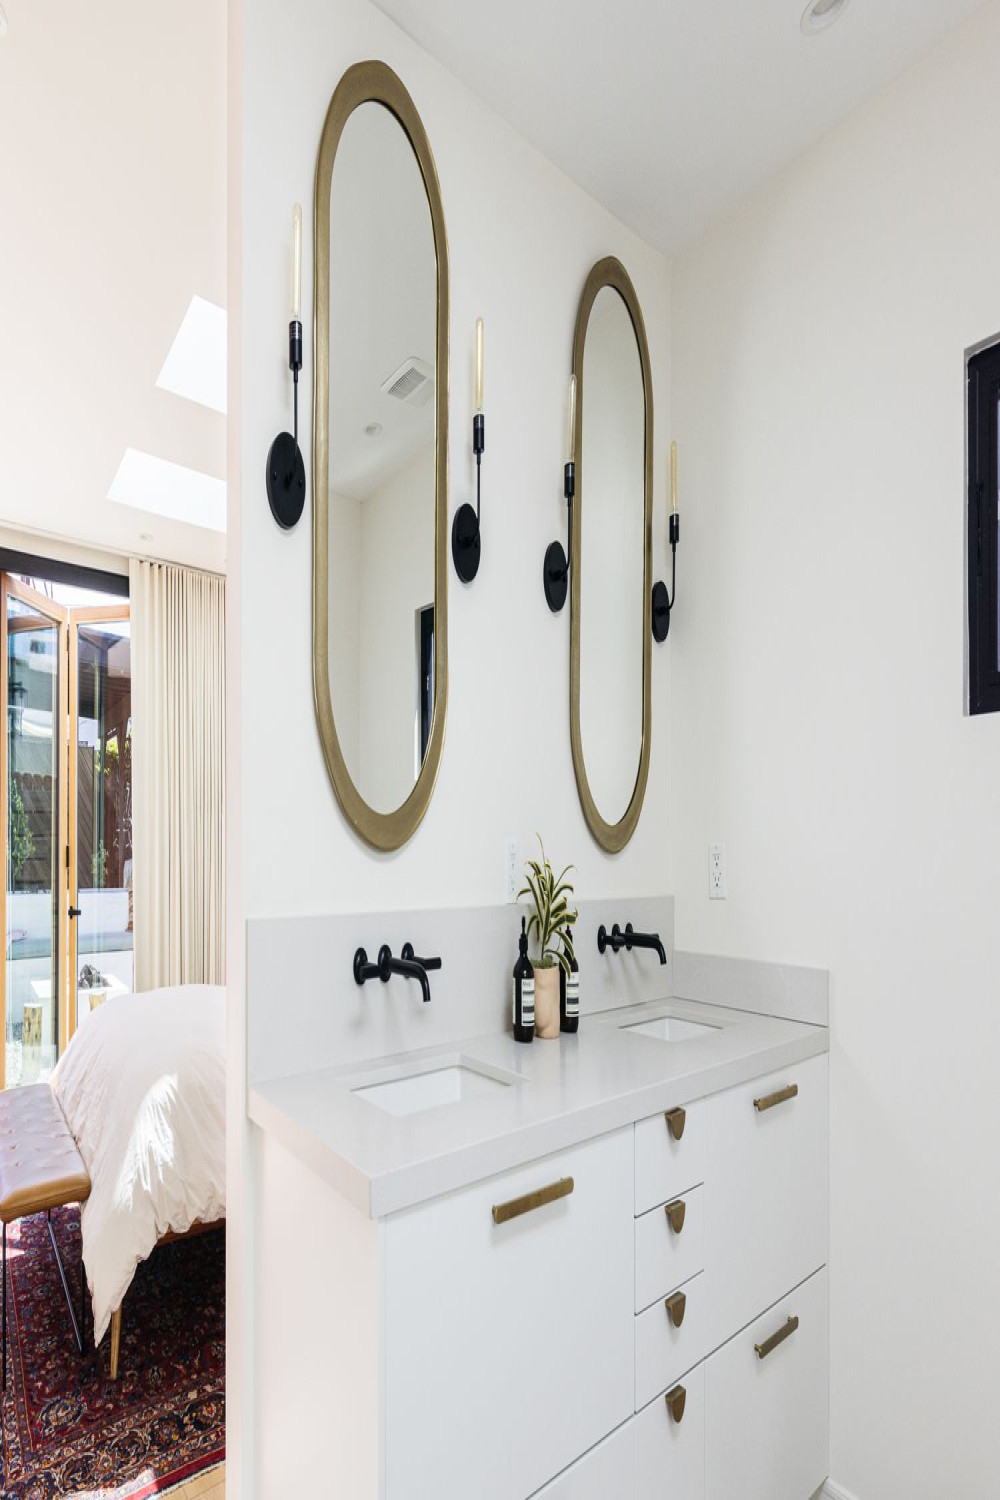 Double Vanity Bathroom Ideas We Love